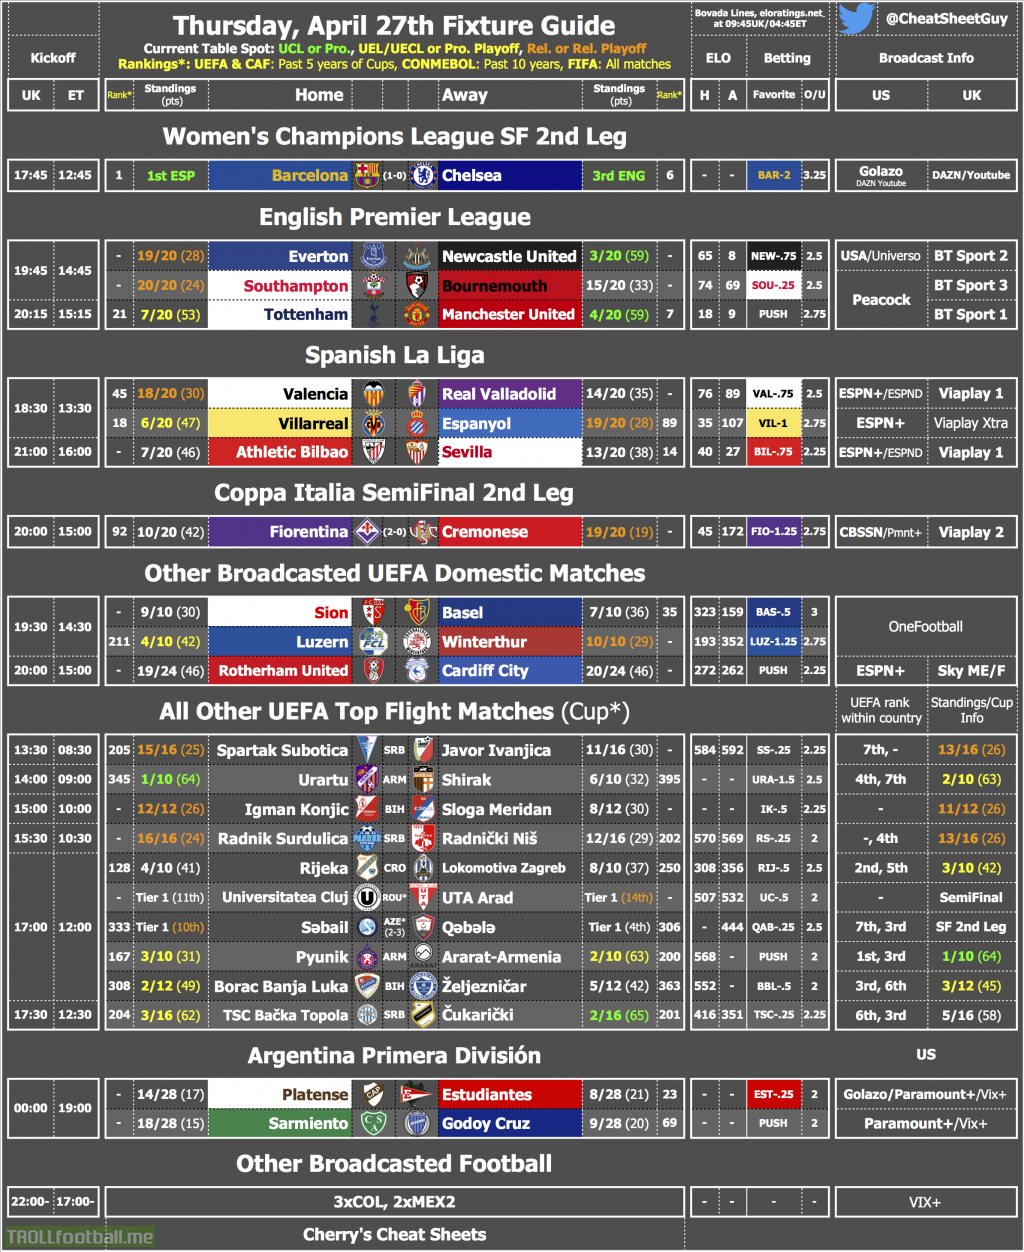 Thursday's Fixtures & Broadcast Cheat Sheet [OC]